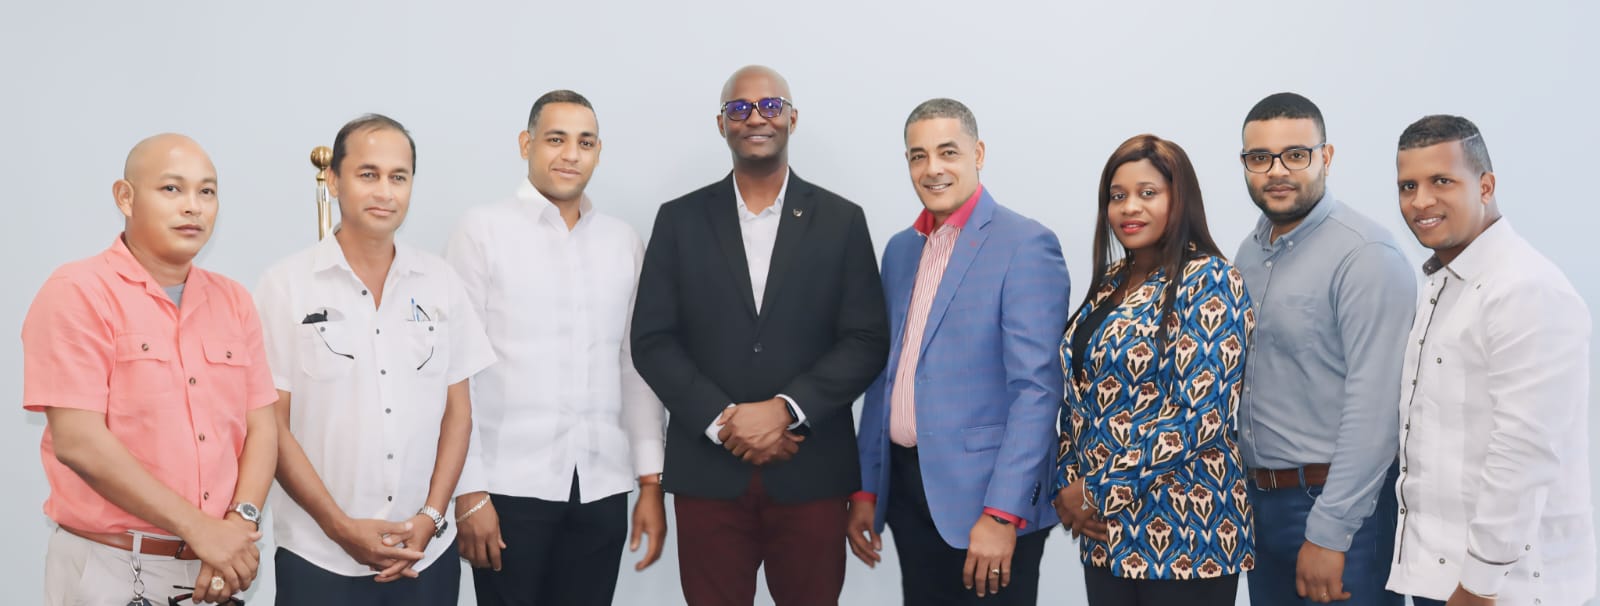 GCCI invited to business mission to Dominican Republic city